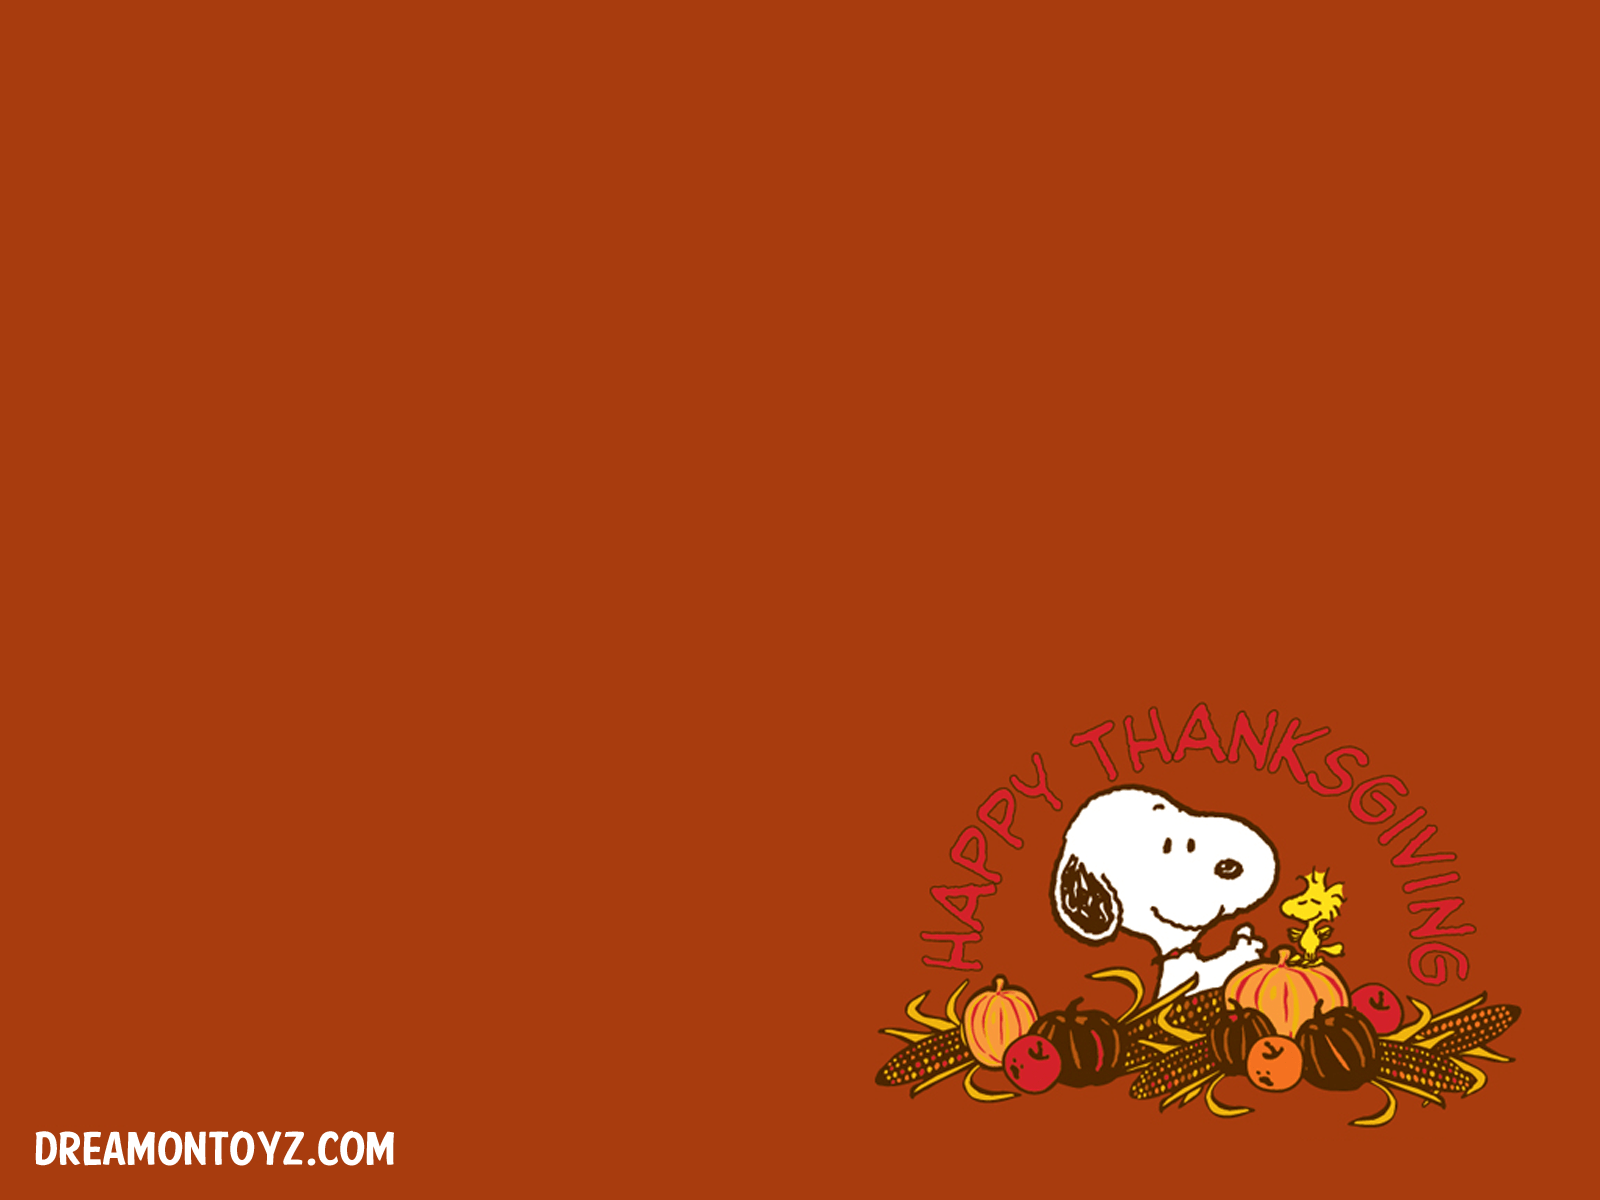 Free Snoopy Thanksgiving Wallpaper